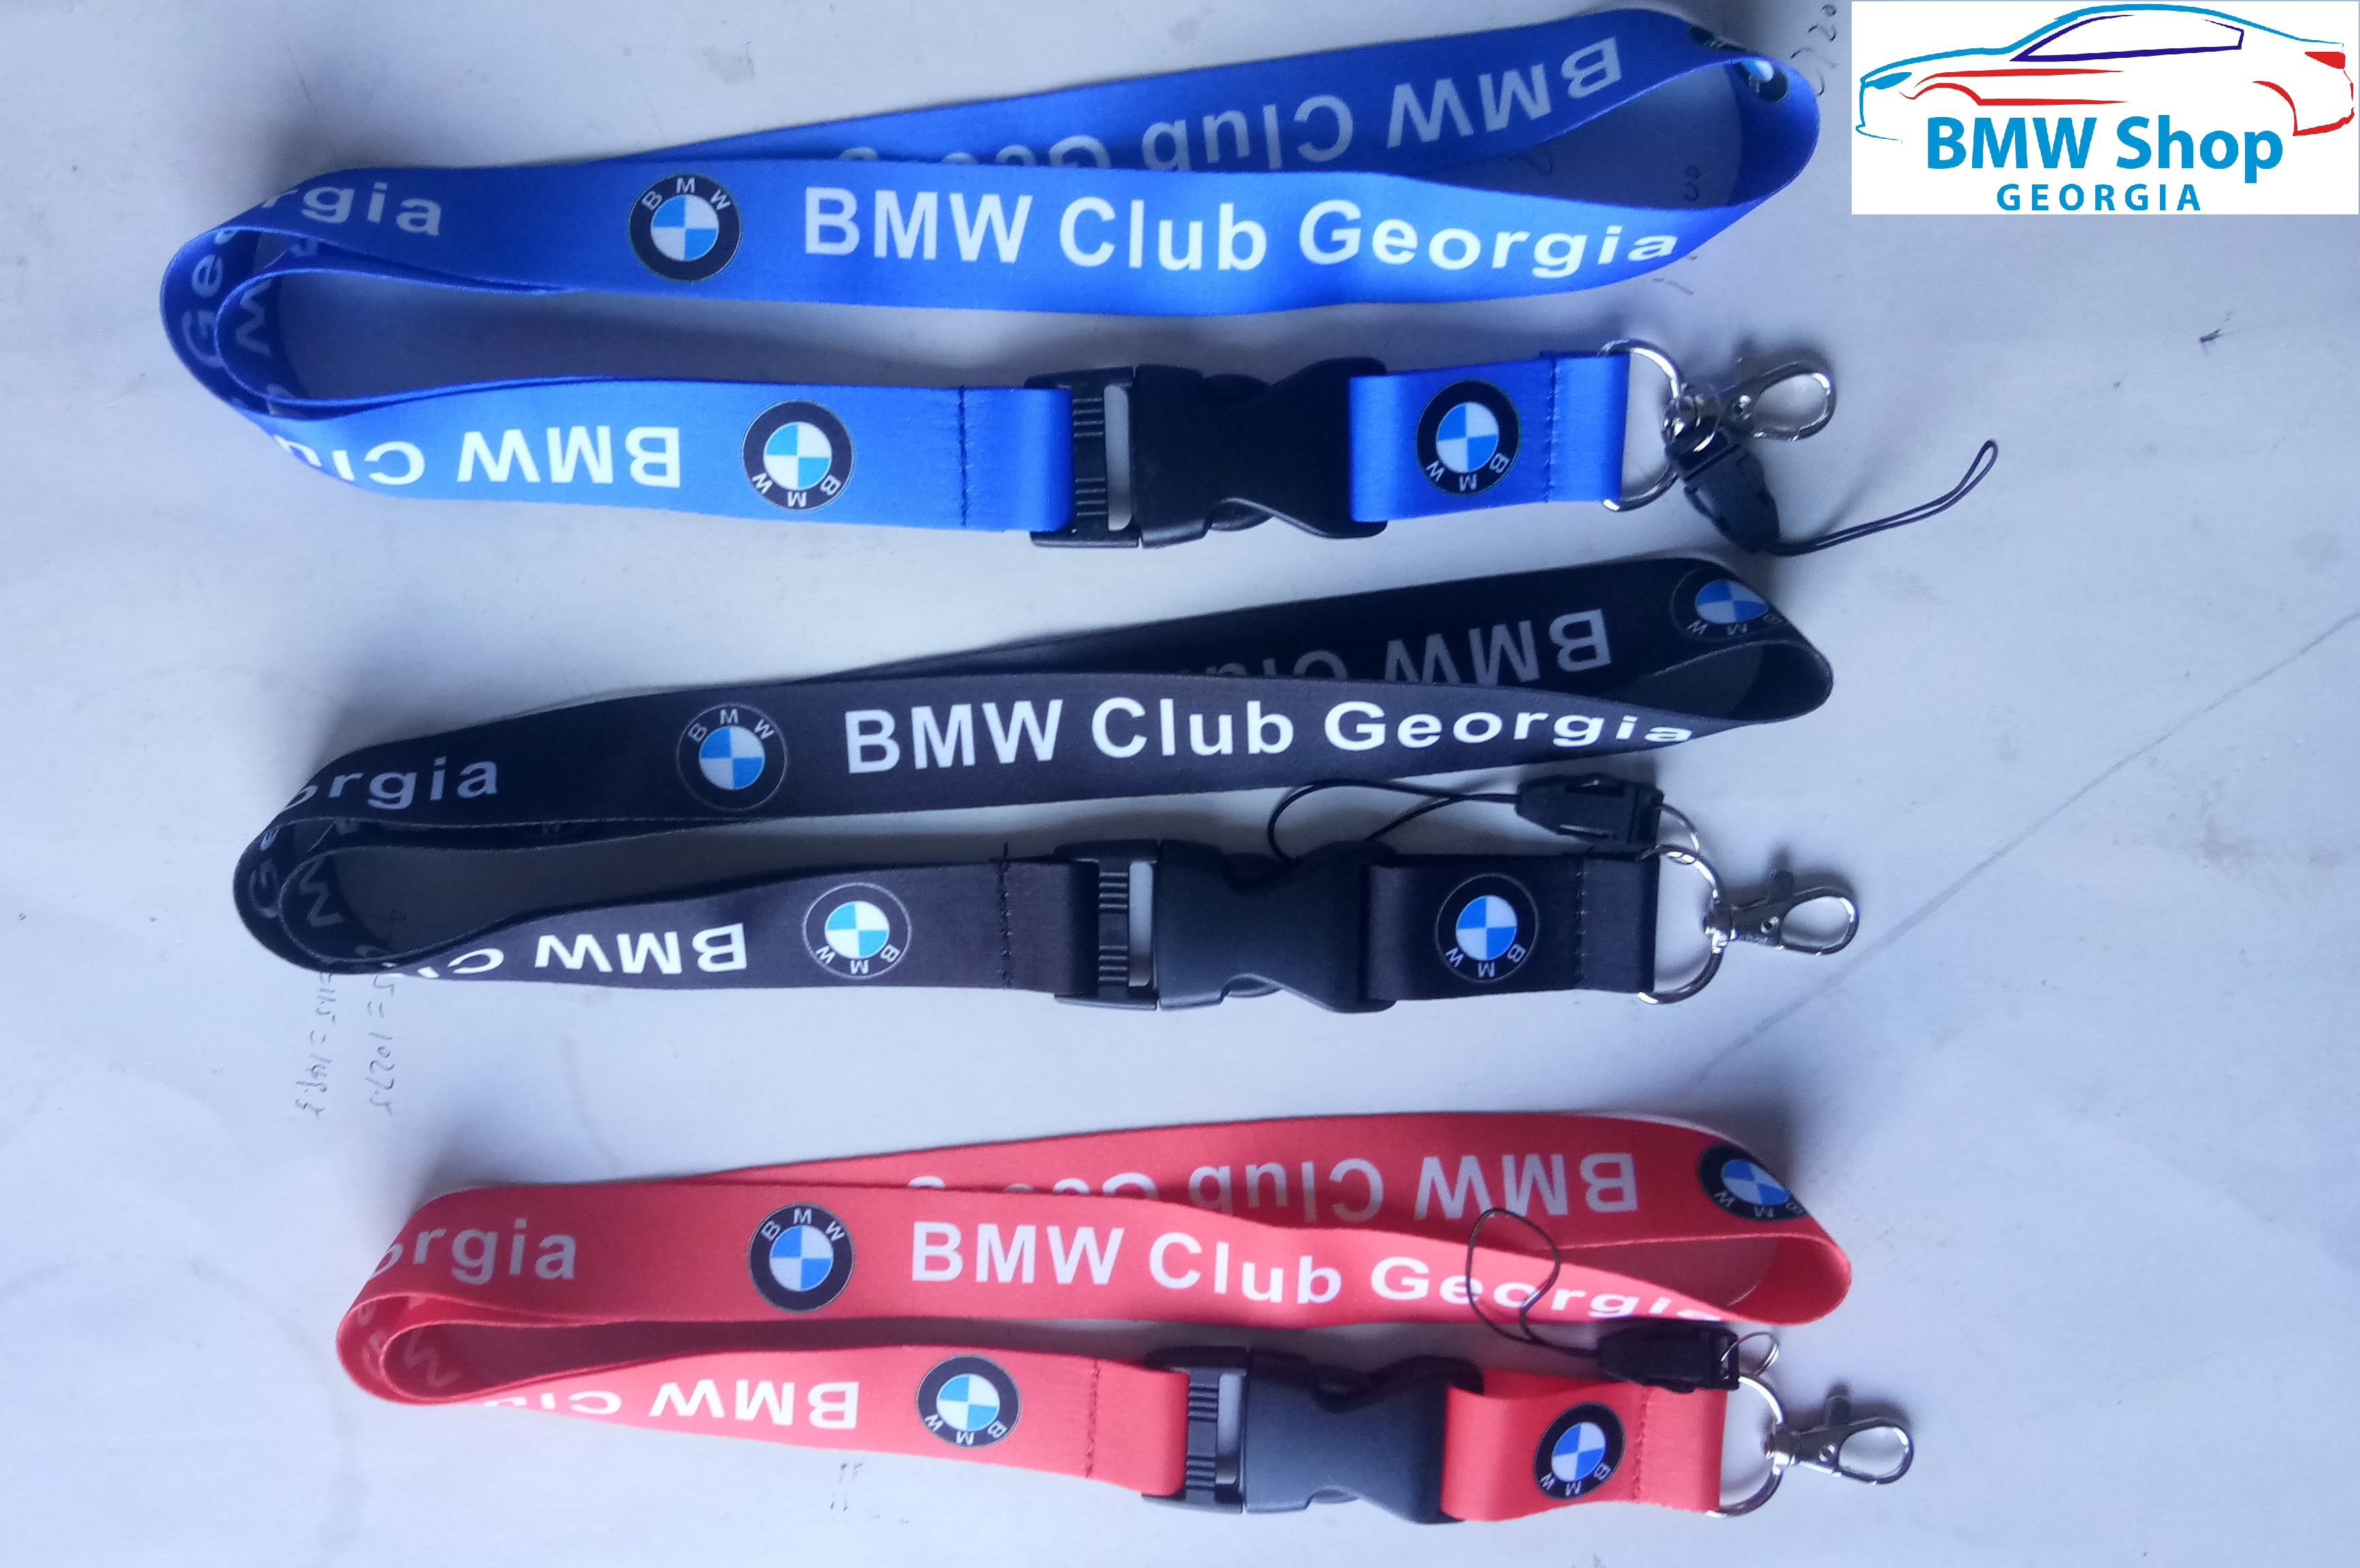 BMW Club Georgia for hanging keys, phone.